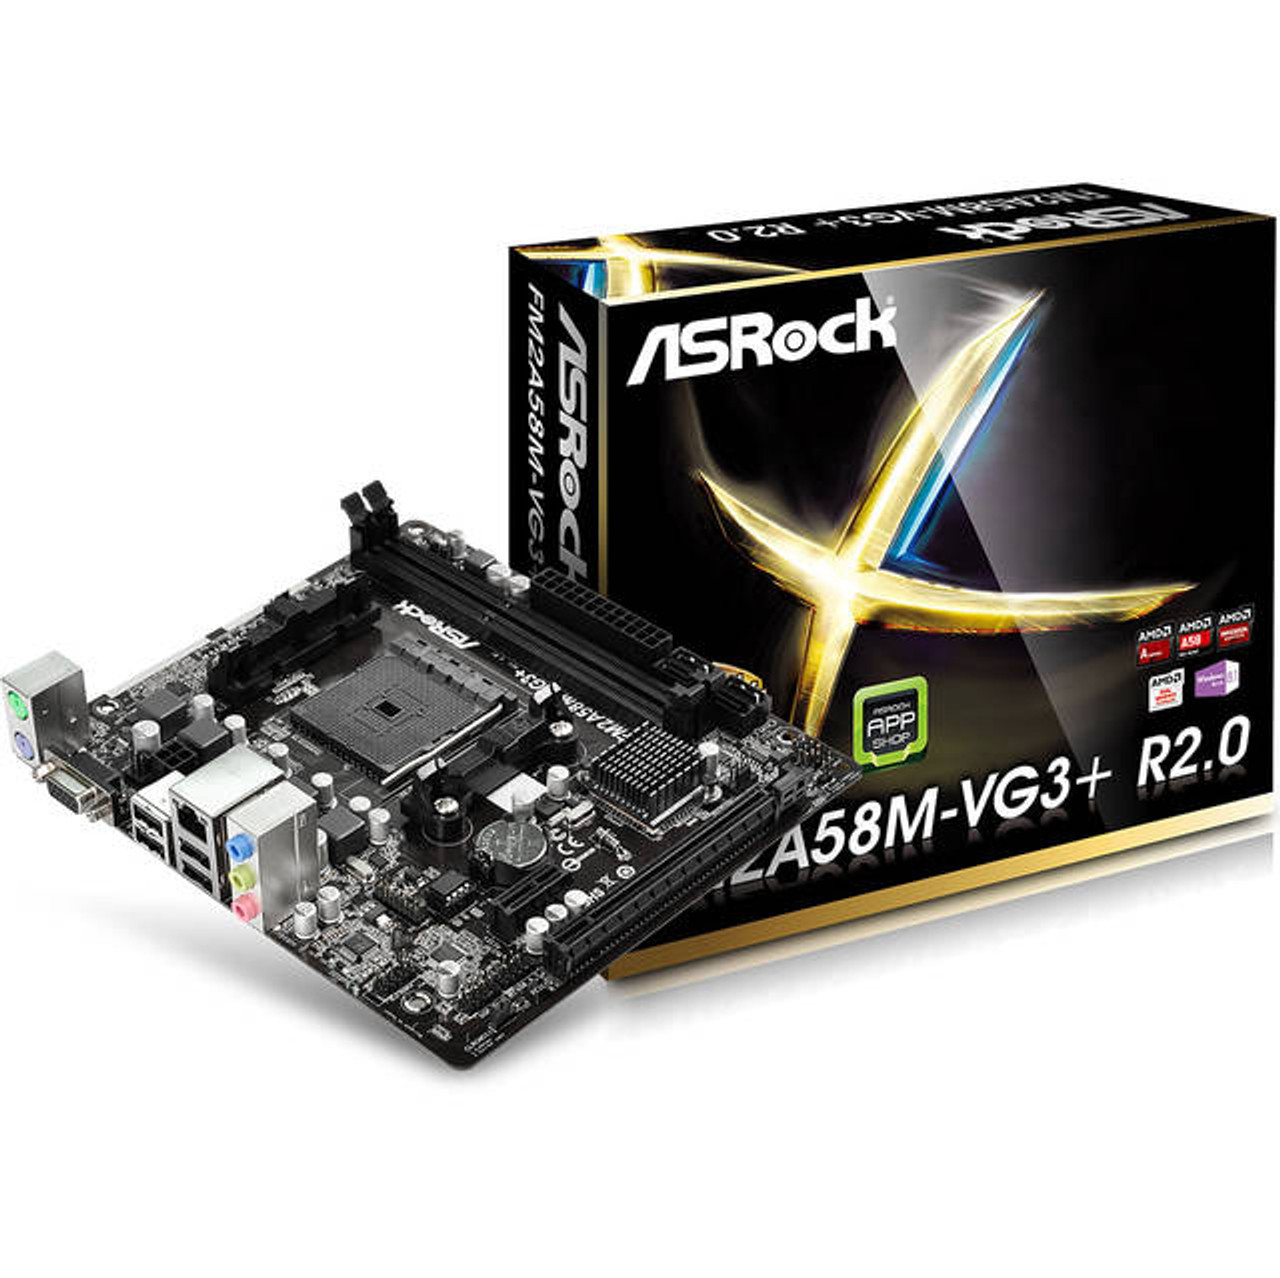 ASRock FM2A58M-VG3+ R2.0 Socket FM2+/ AMD A58 FCH/ DDR3/ A&GbE/ MicroATX Motherboard